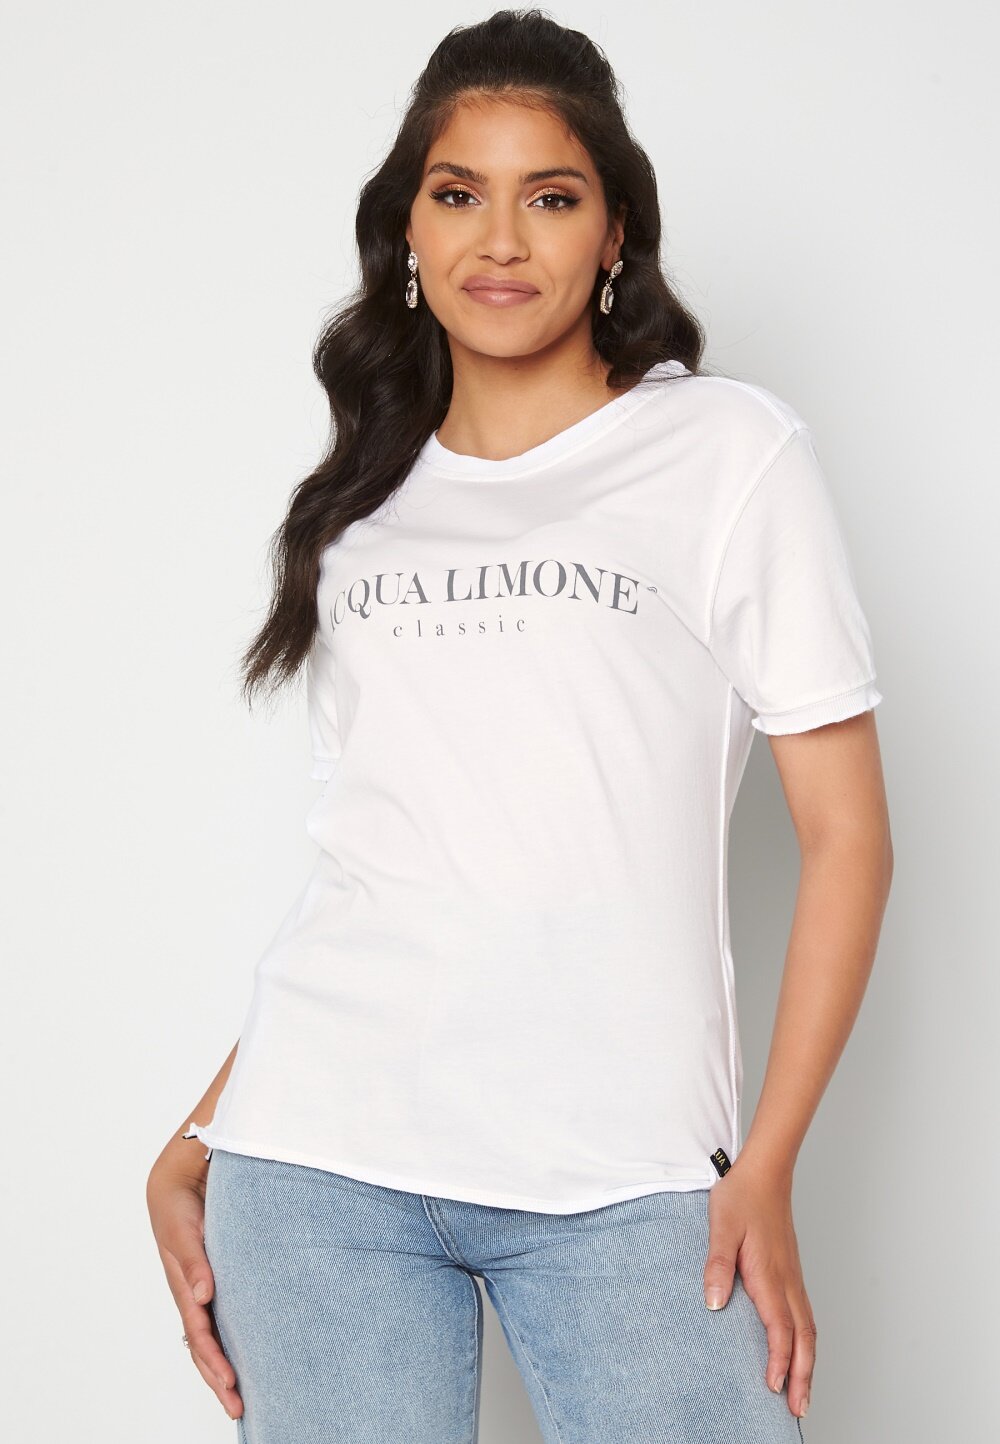 Acqua Limone T-shirt Classic White